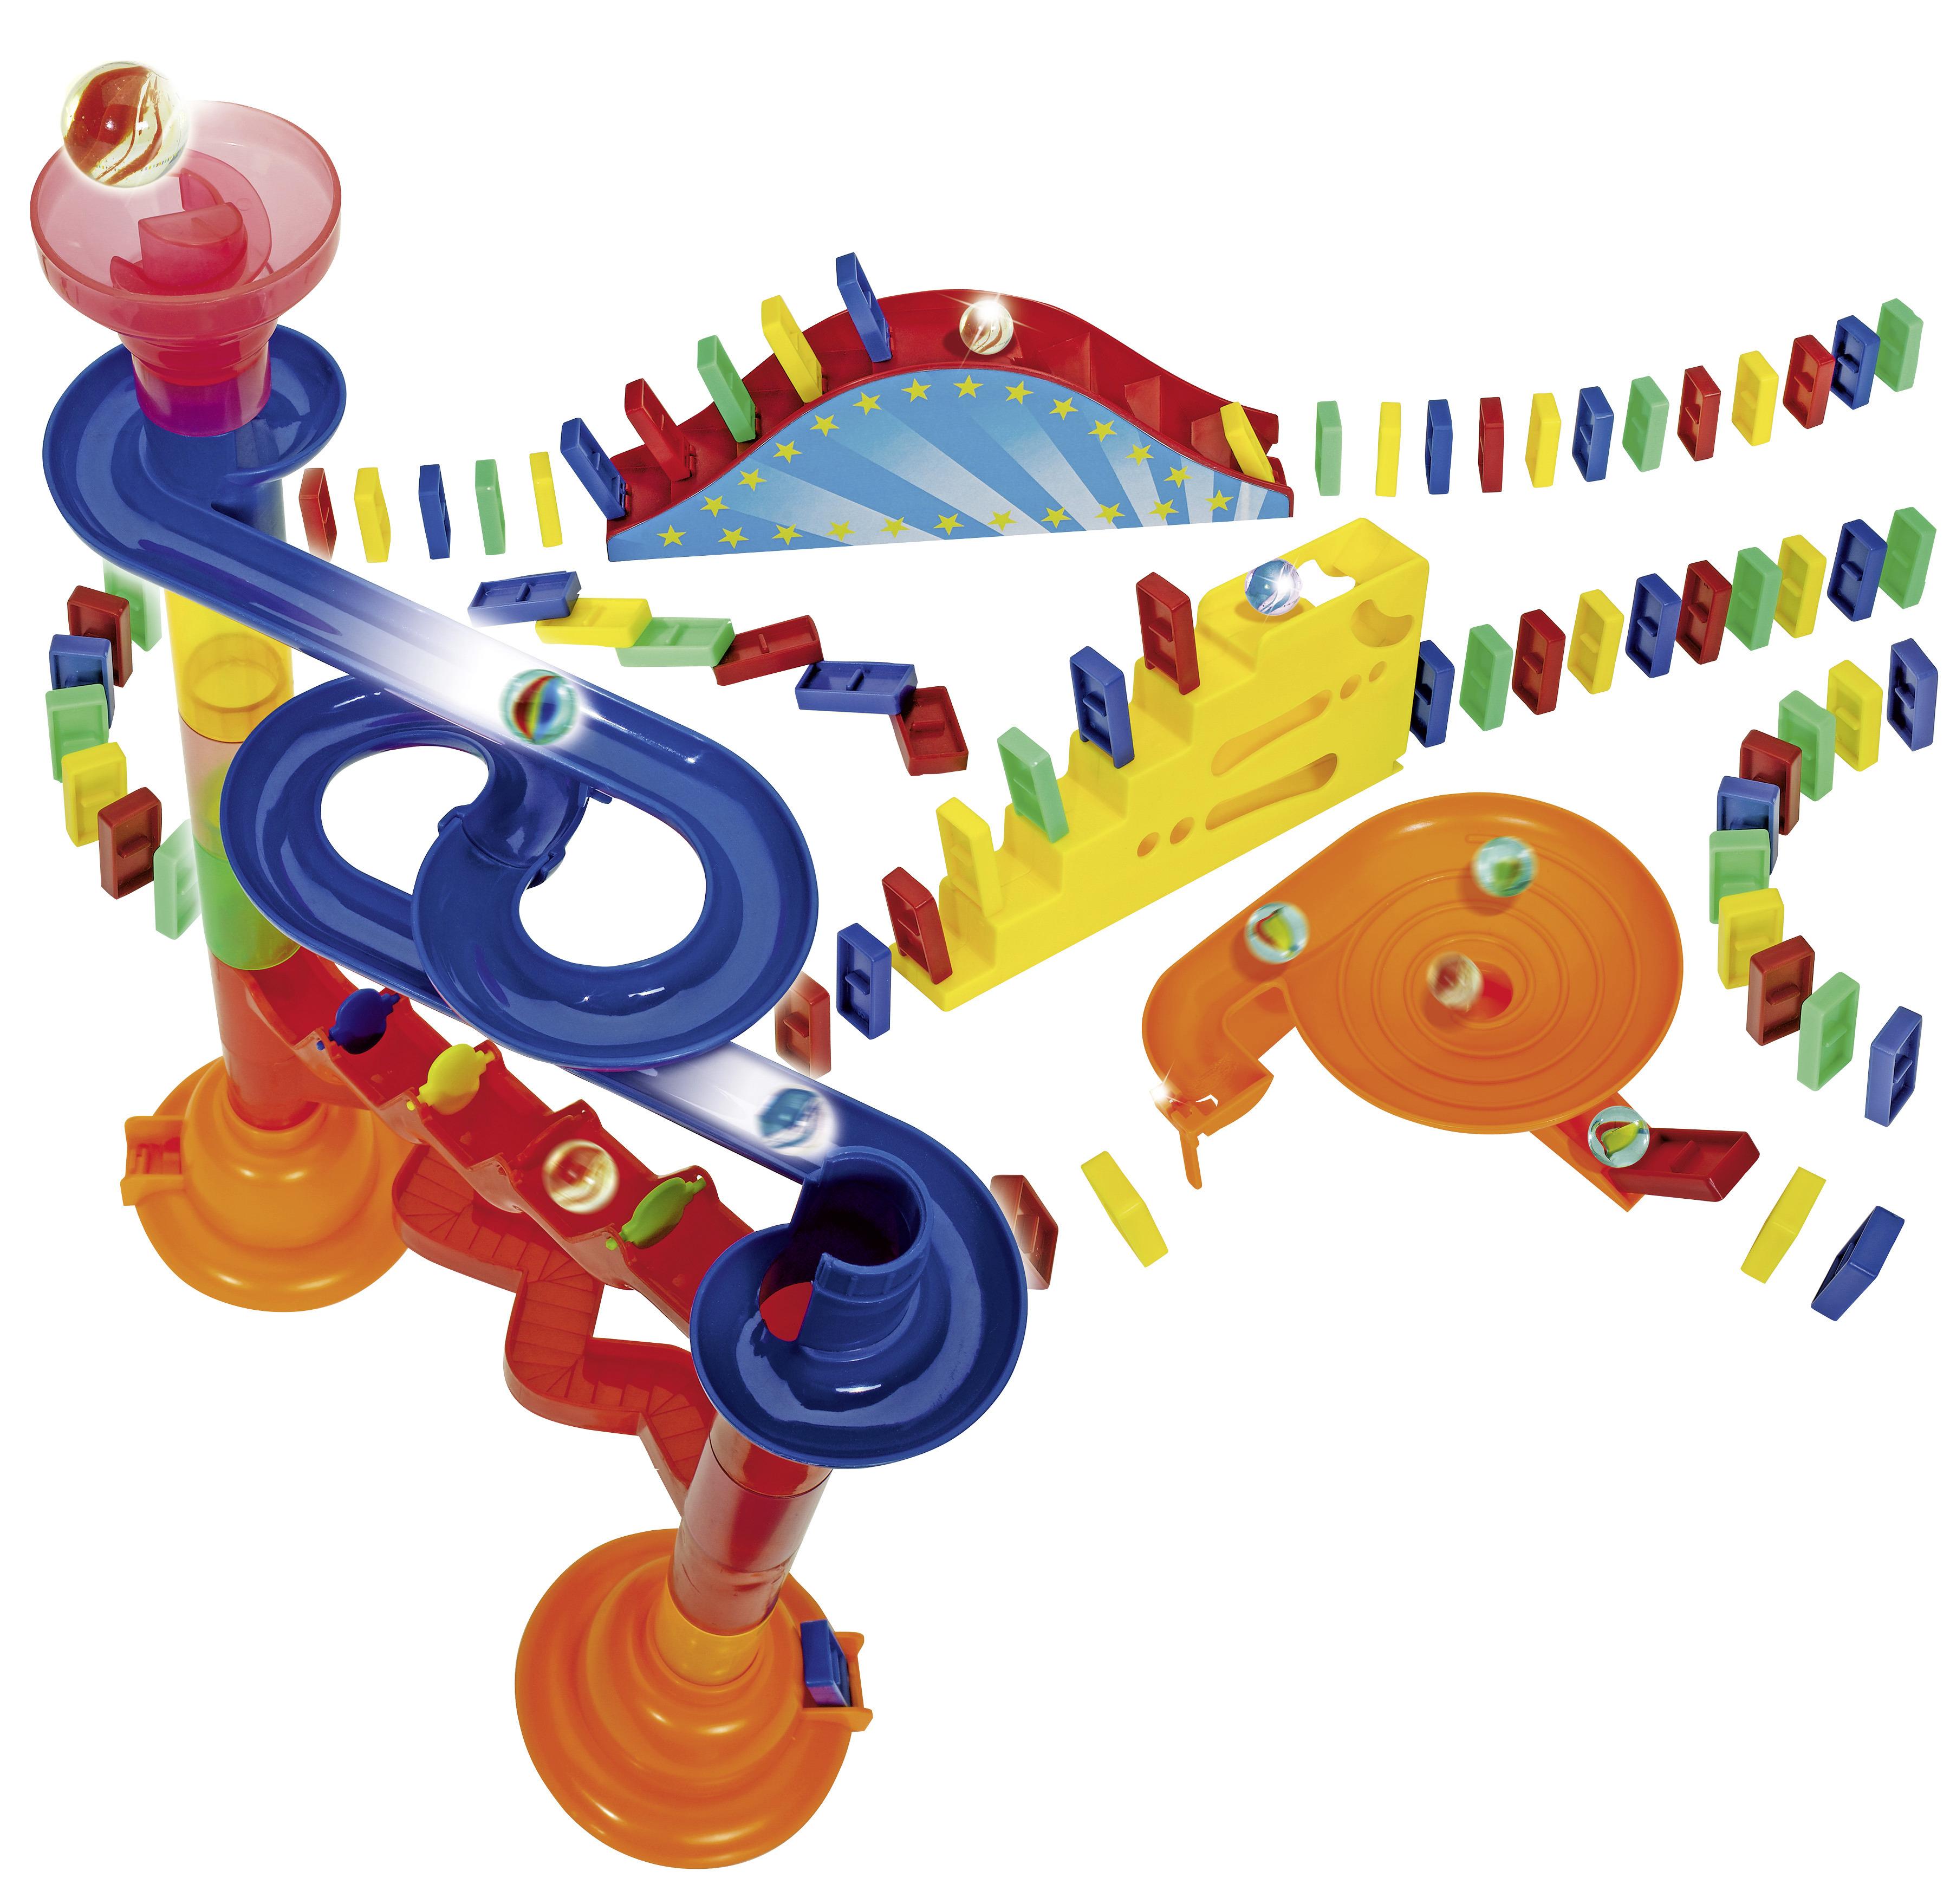 240stk Holz Kinder Domino Kinderspiel Spielen Racing Lernspielzeug für Kinder DE 